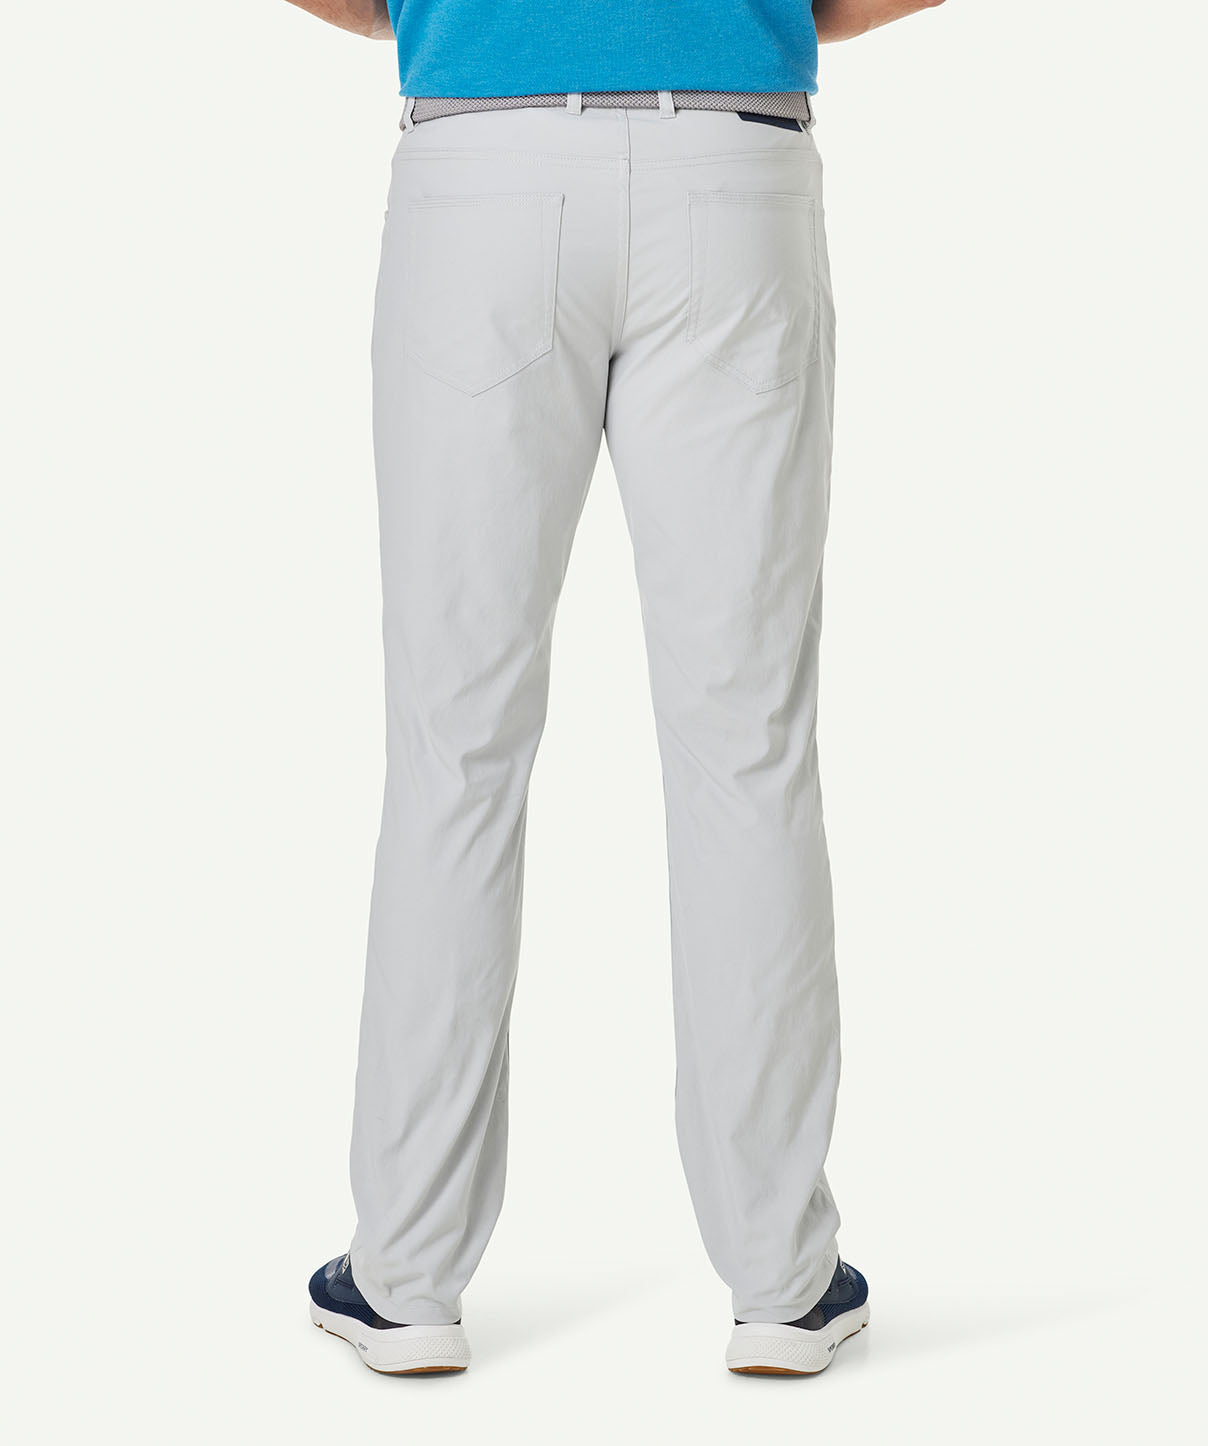 GAZFLEX Performance Pant - Light Grey - Casual Pants - GAZMAN